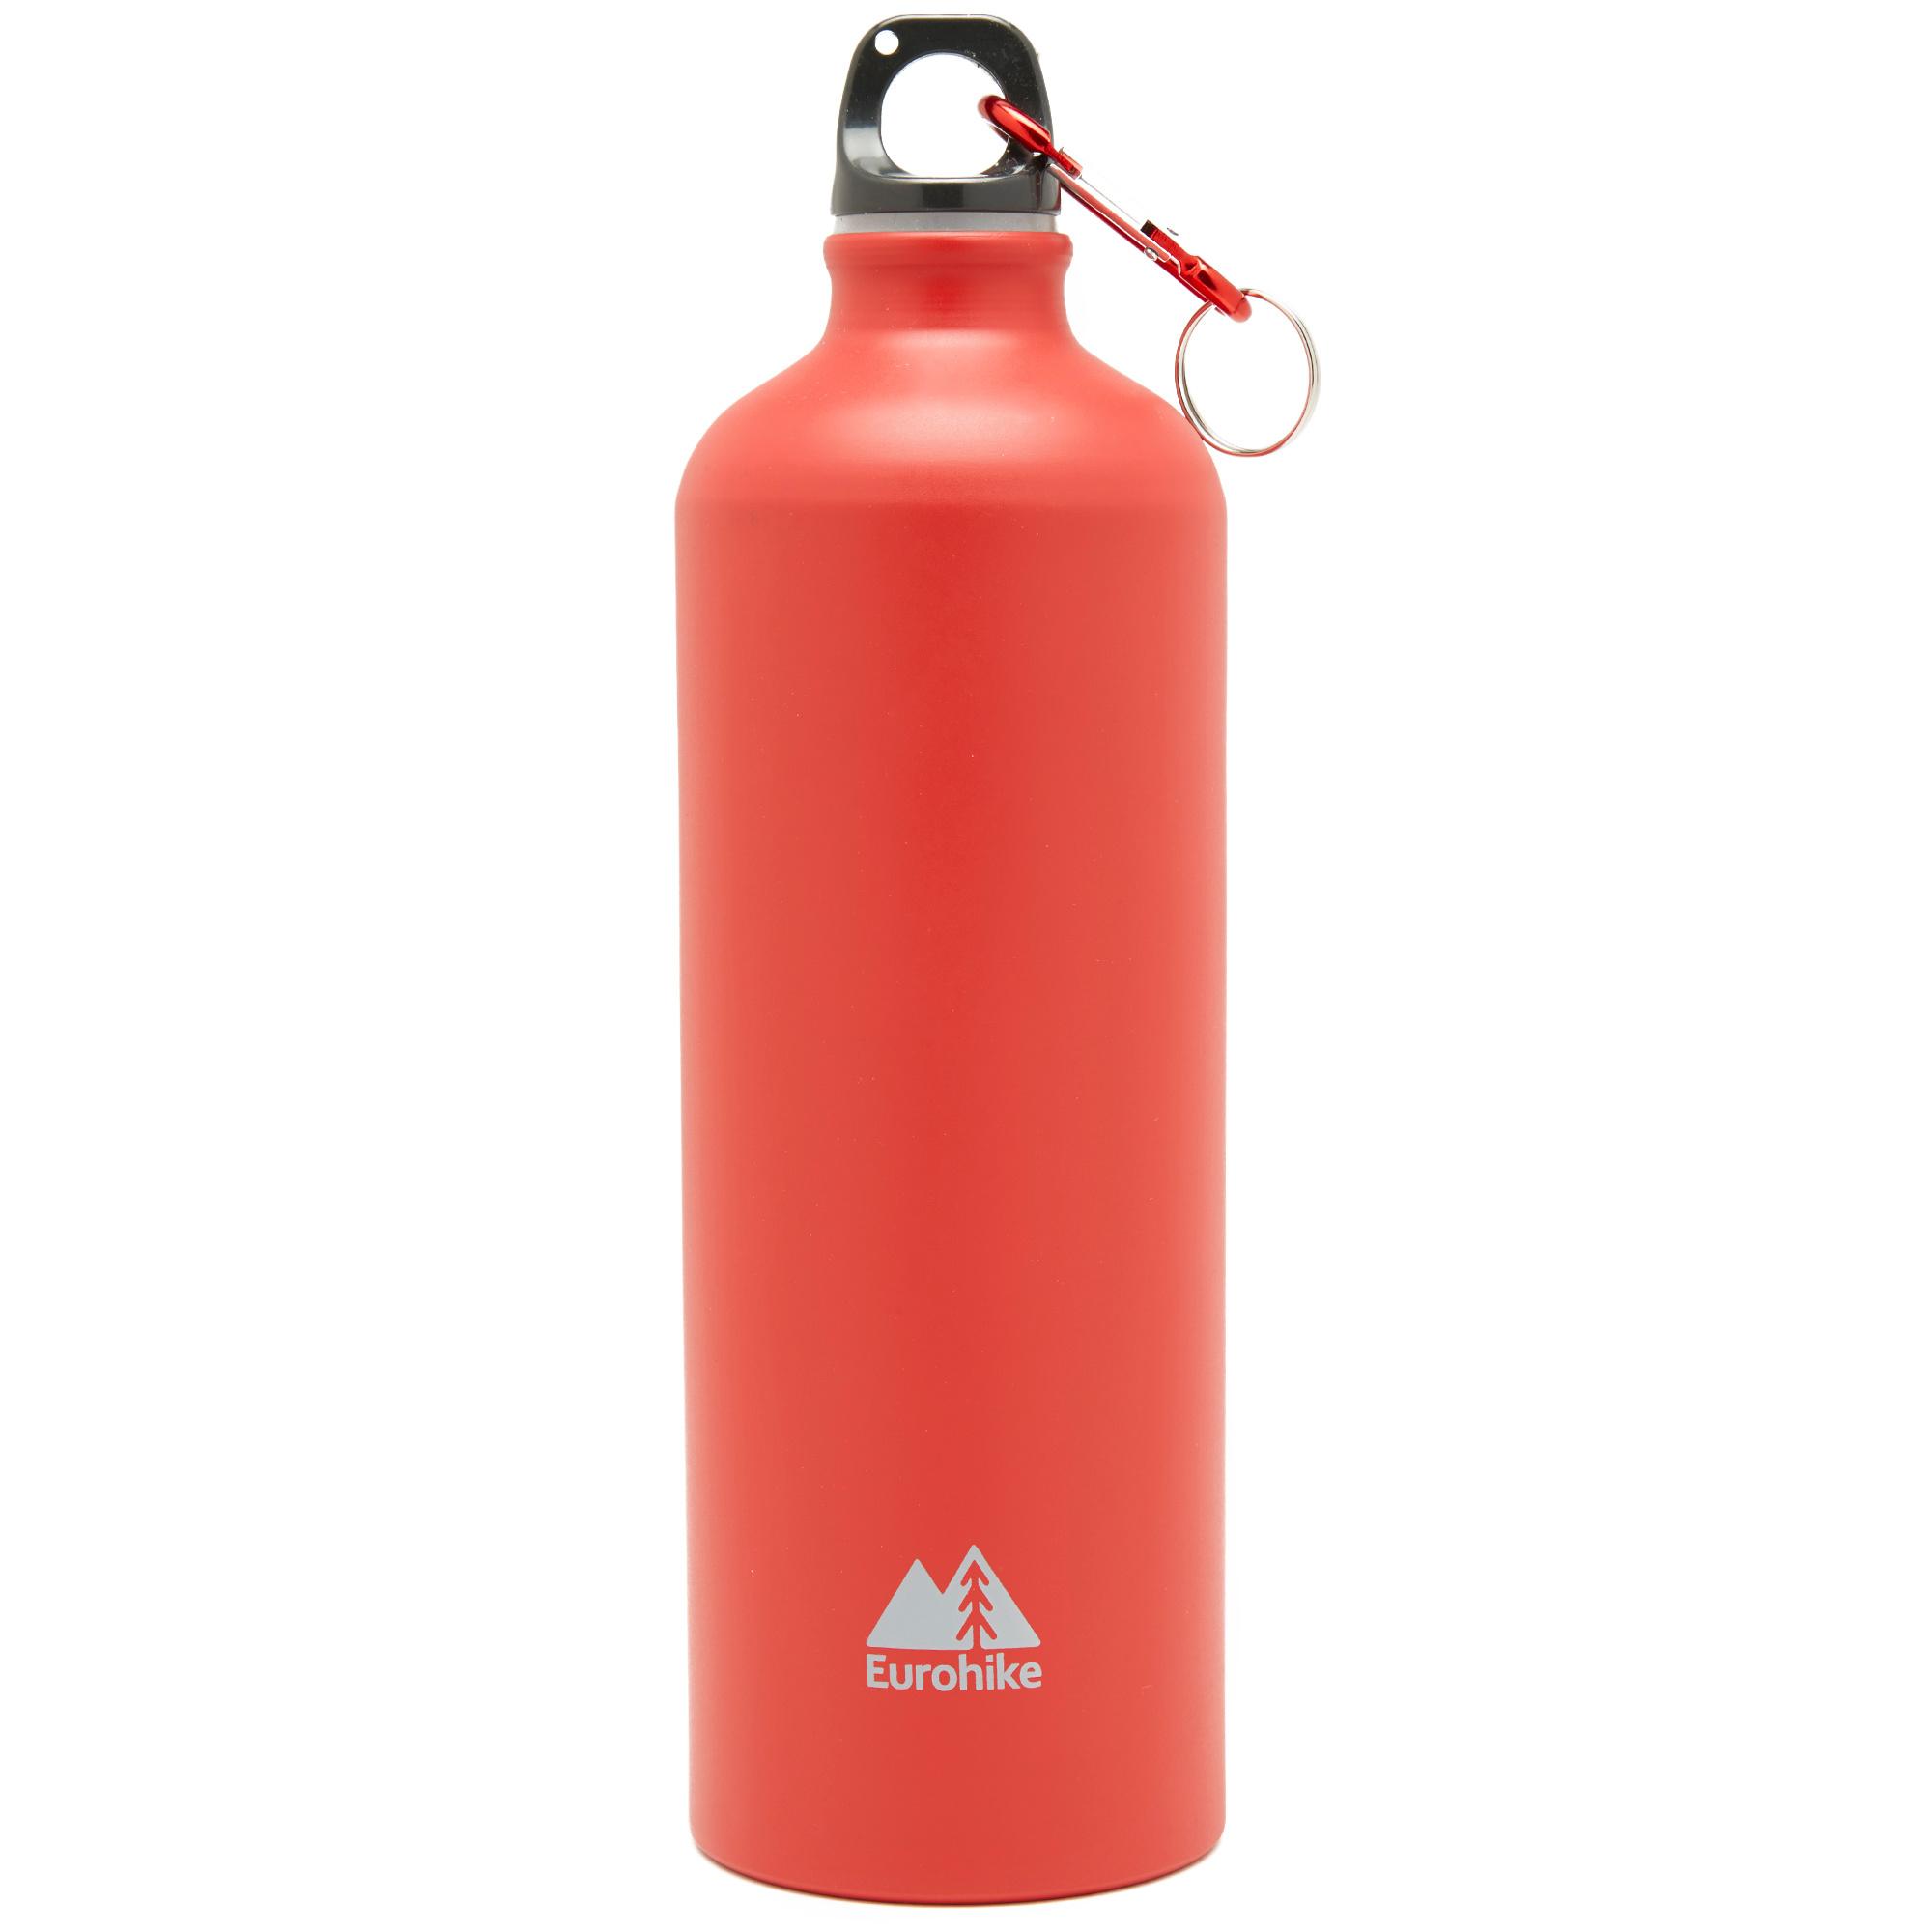 Eurohike Aqua 1l Aluminium Bottle - Red/red  Red/red